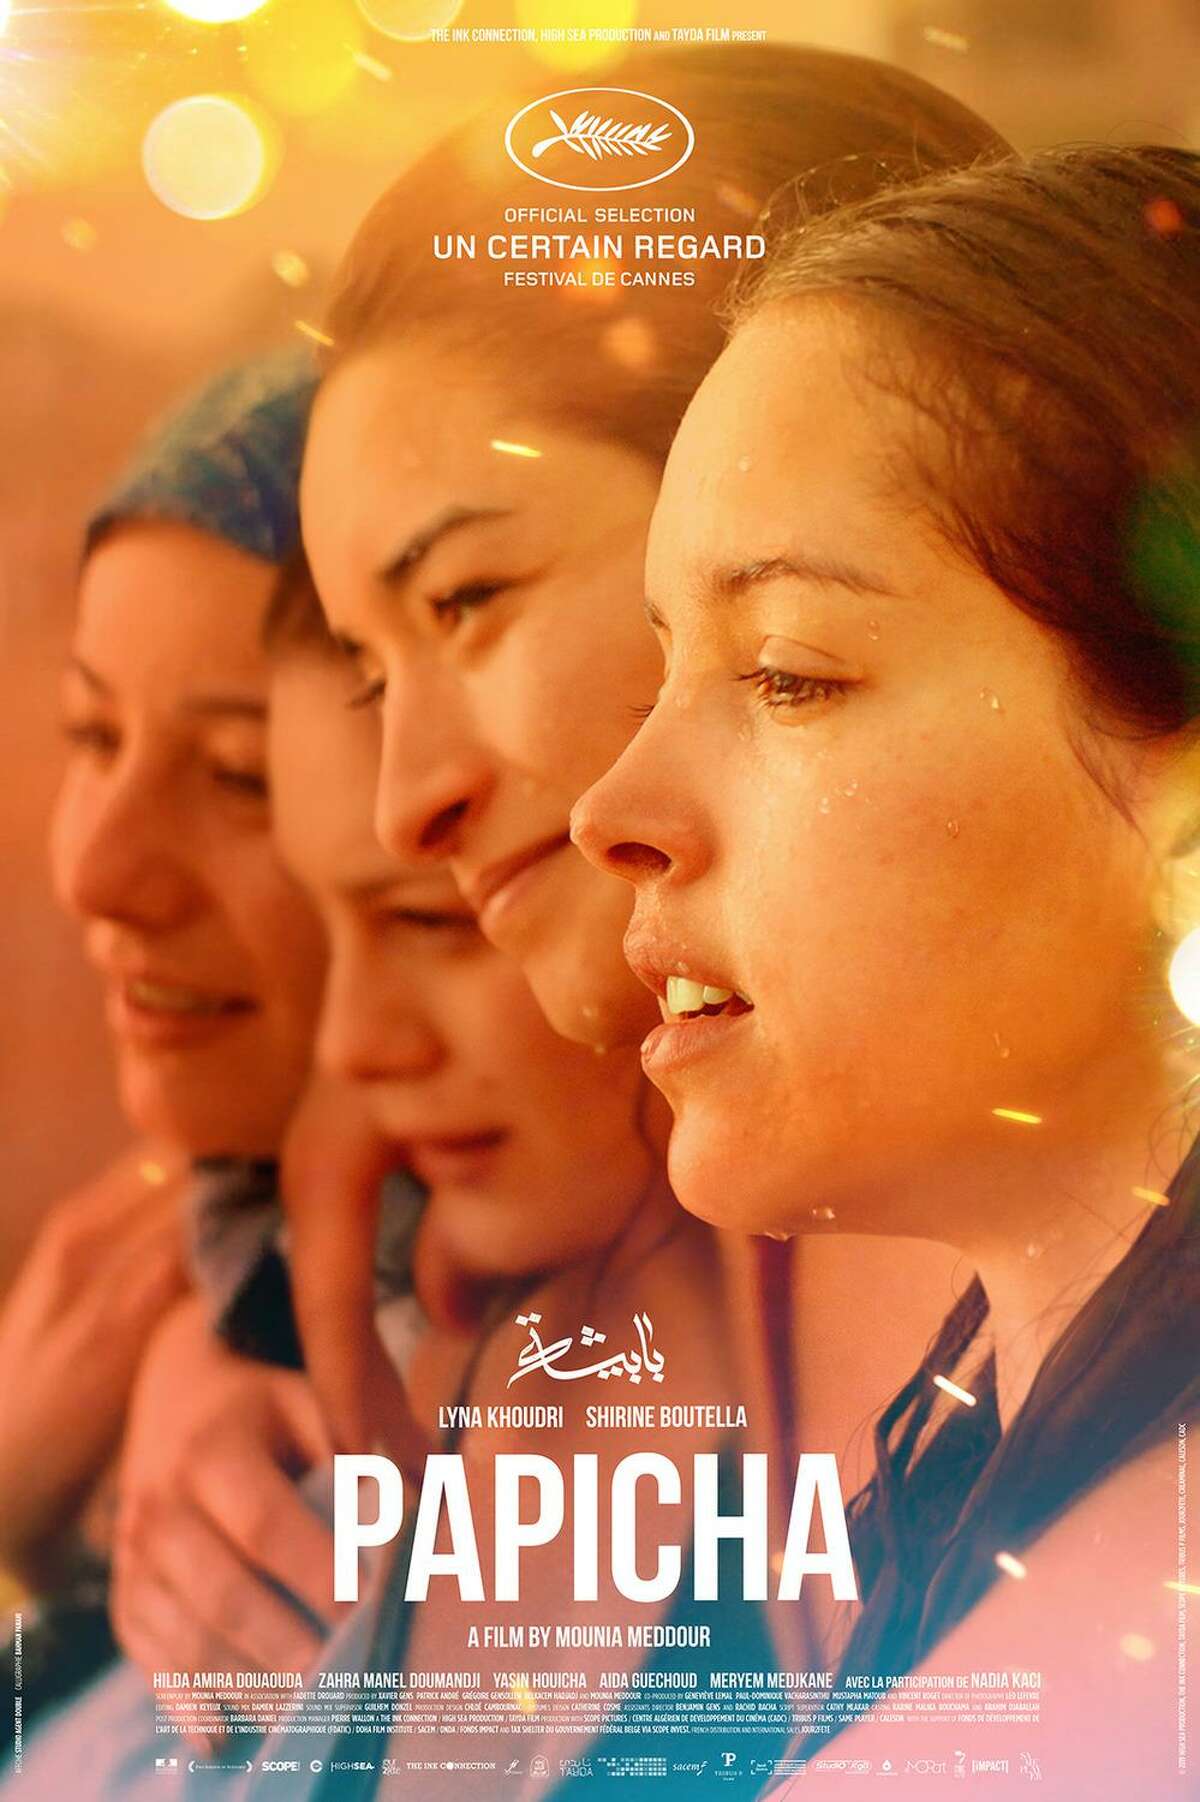 “Papicha” won the César Award for best first film.